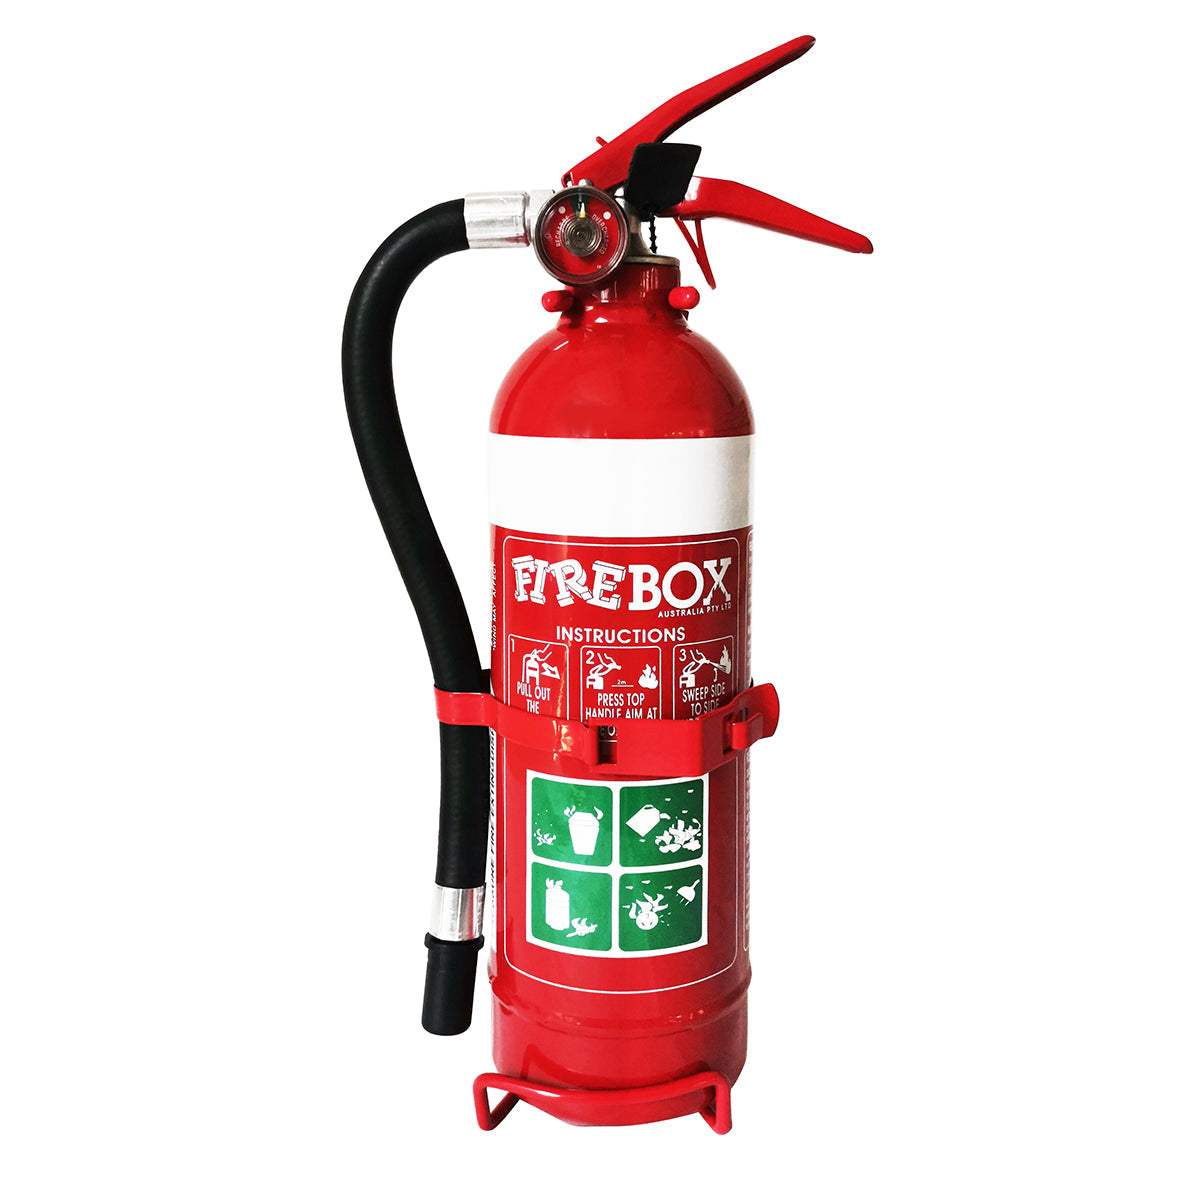 1.5kg Dry Chemical Powder Extinguisher - Premium ABE Extinguishers from Firebox - Shop now at Firebox Australia